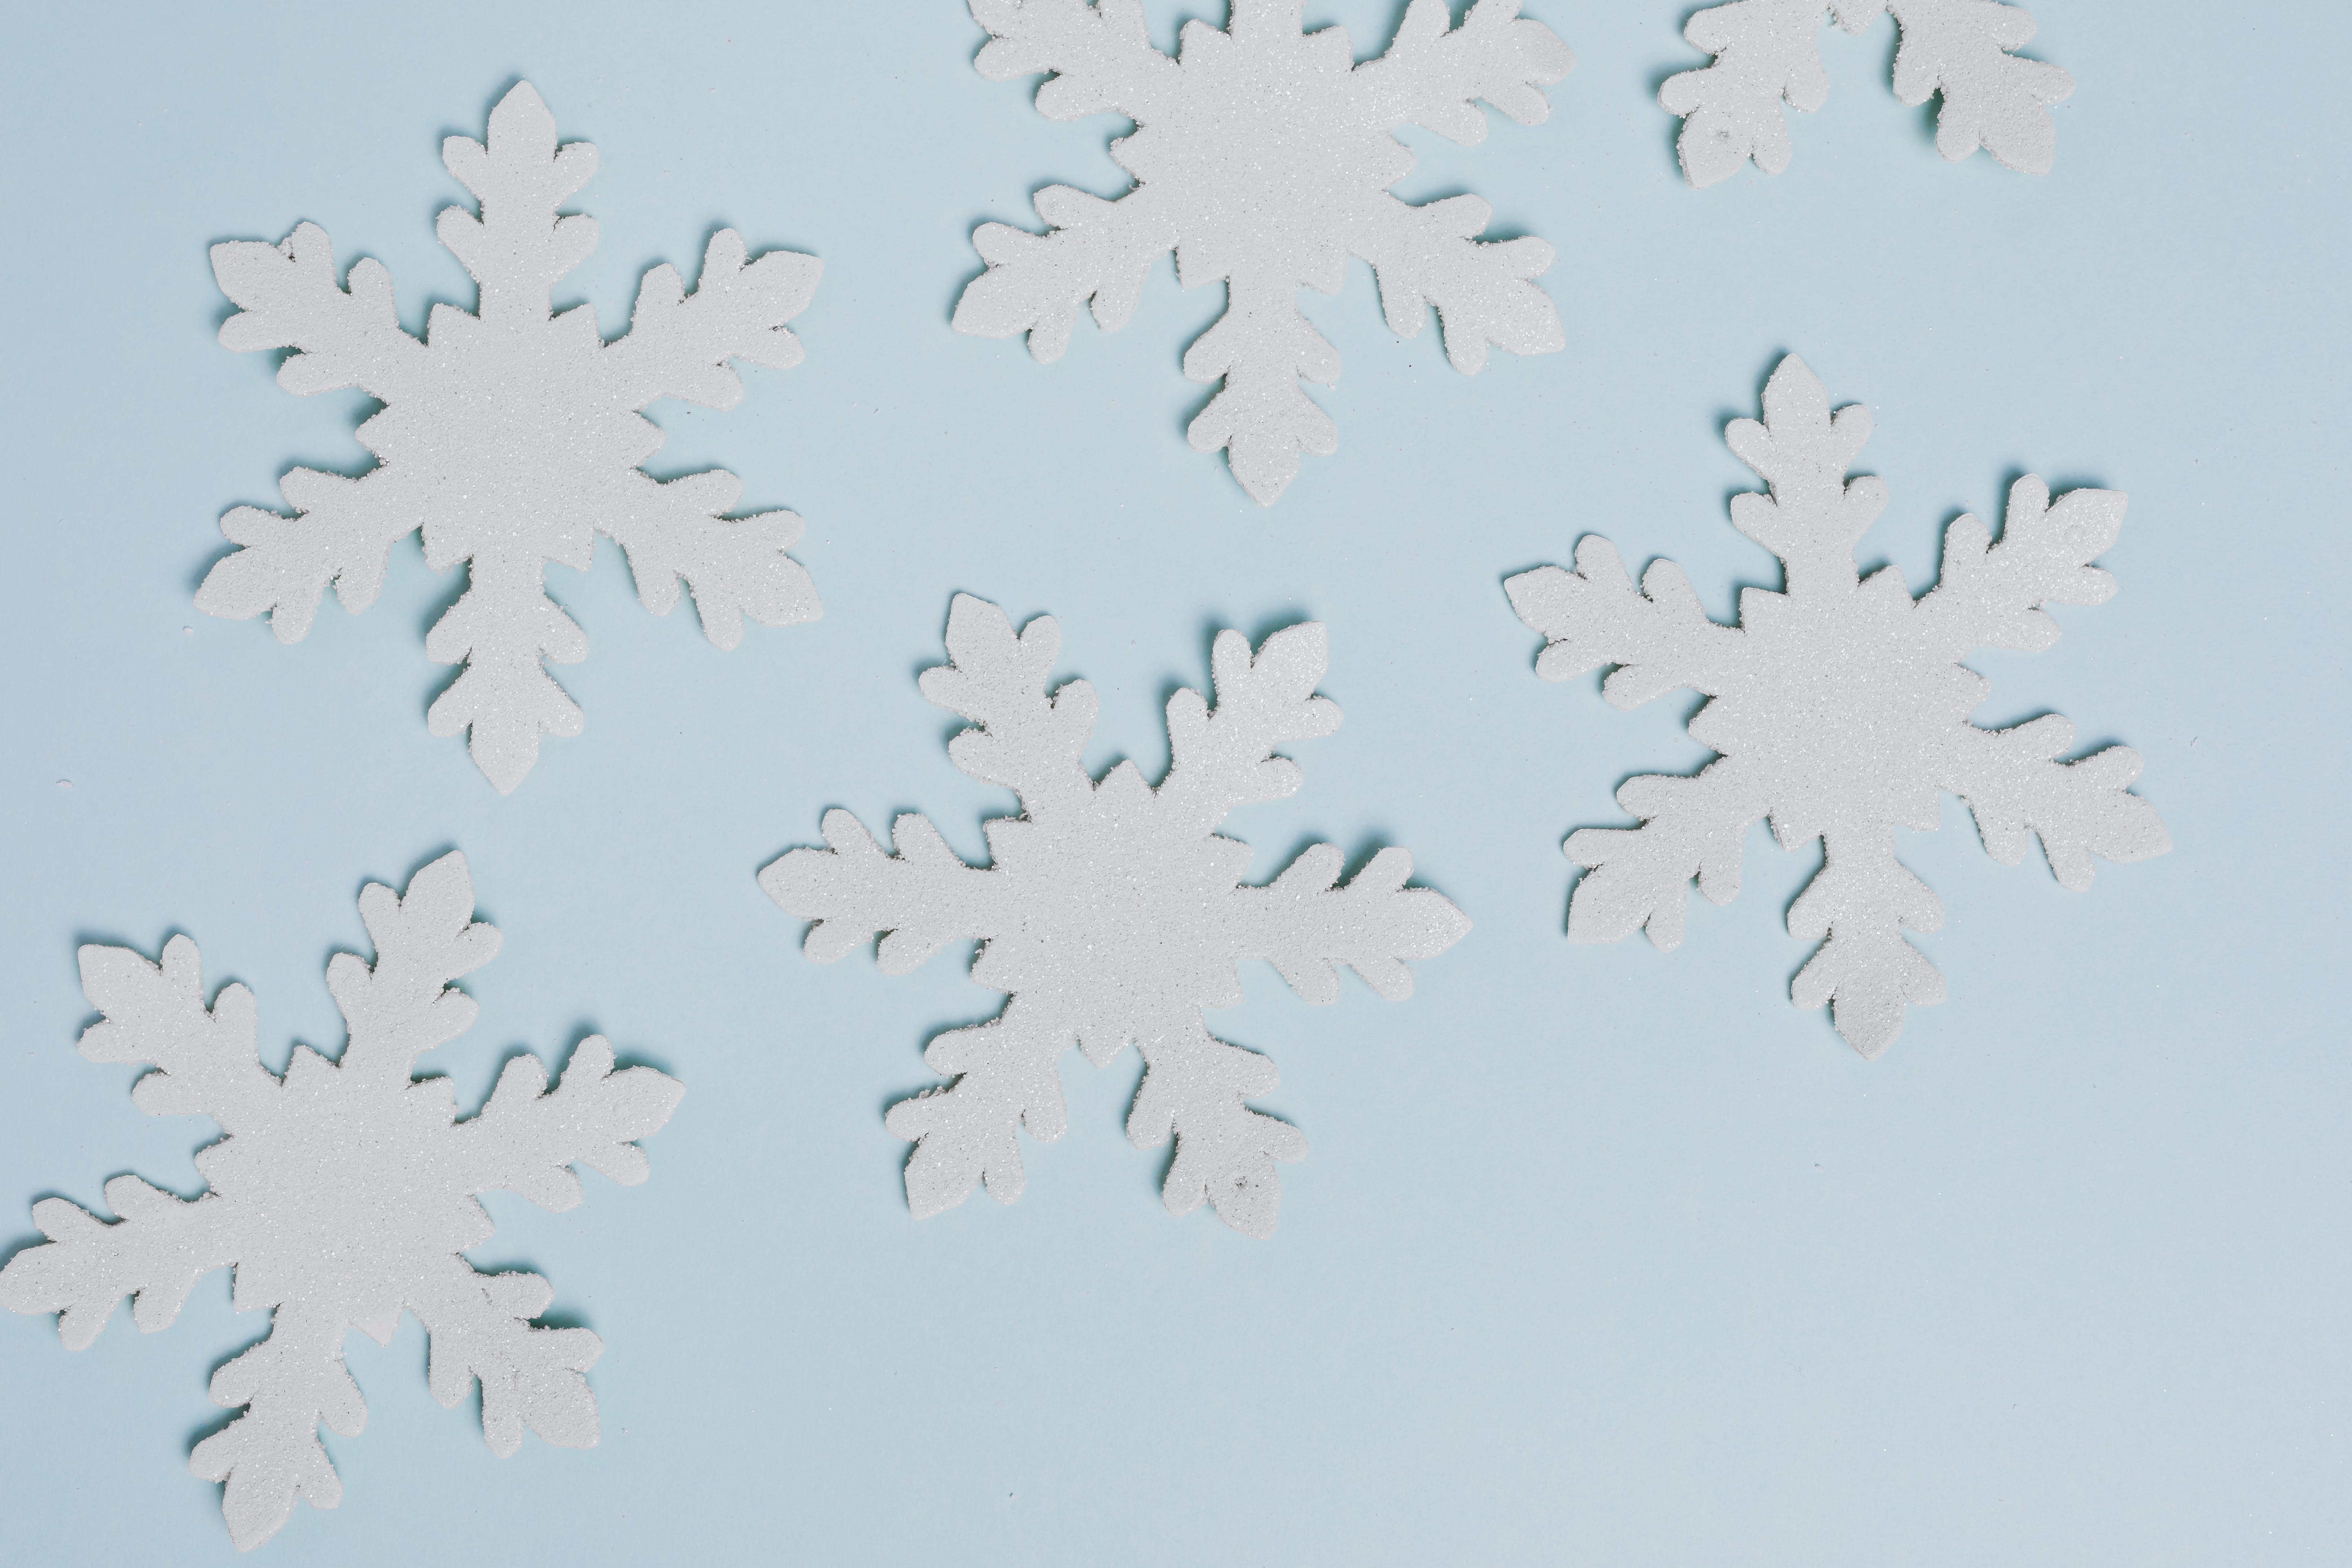 https://www.pexels.com/photo/snowflakes-on-blue-background-5485049/